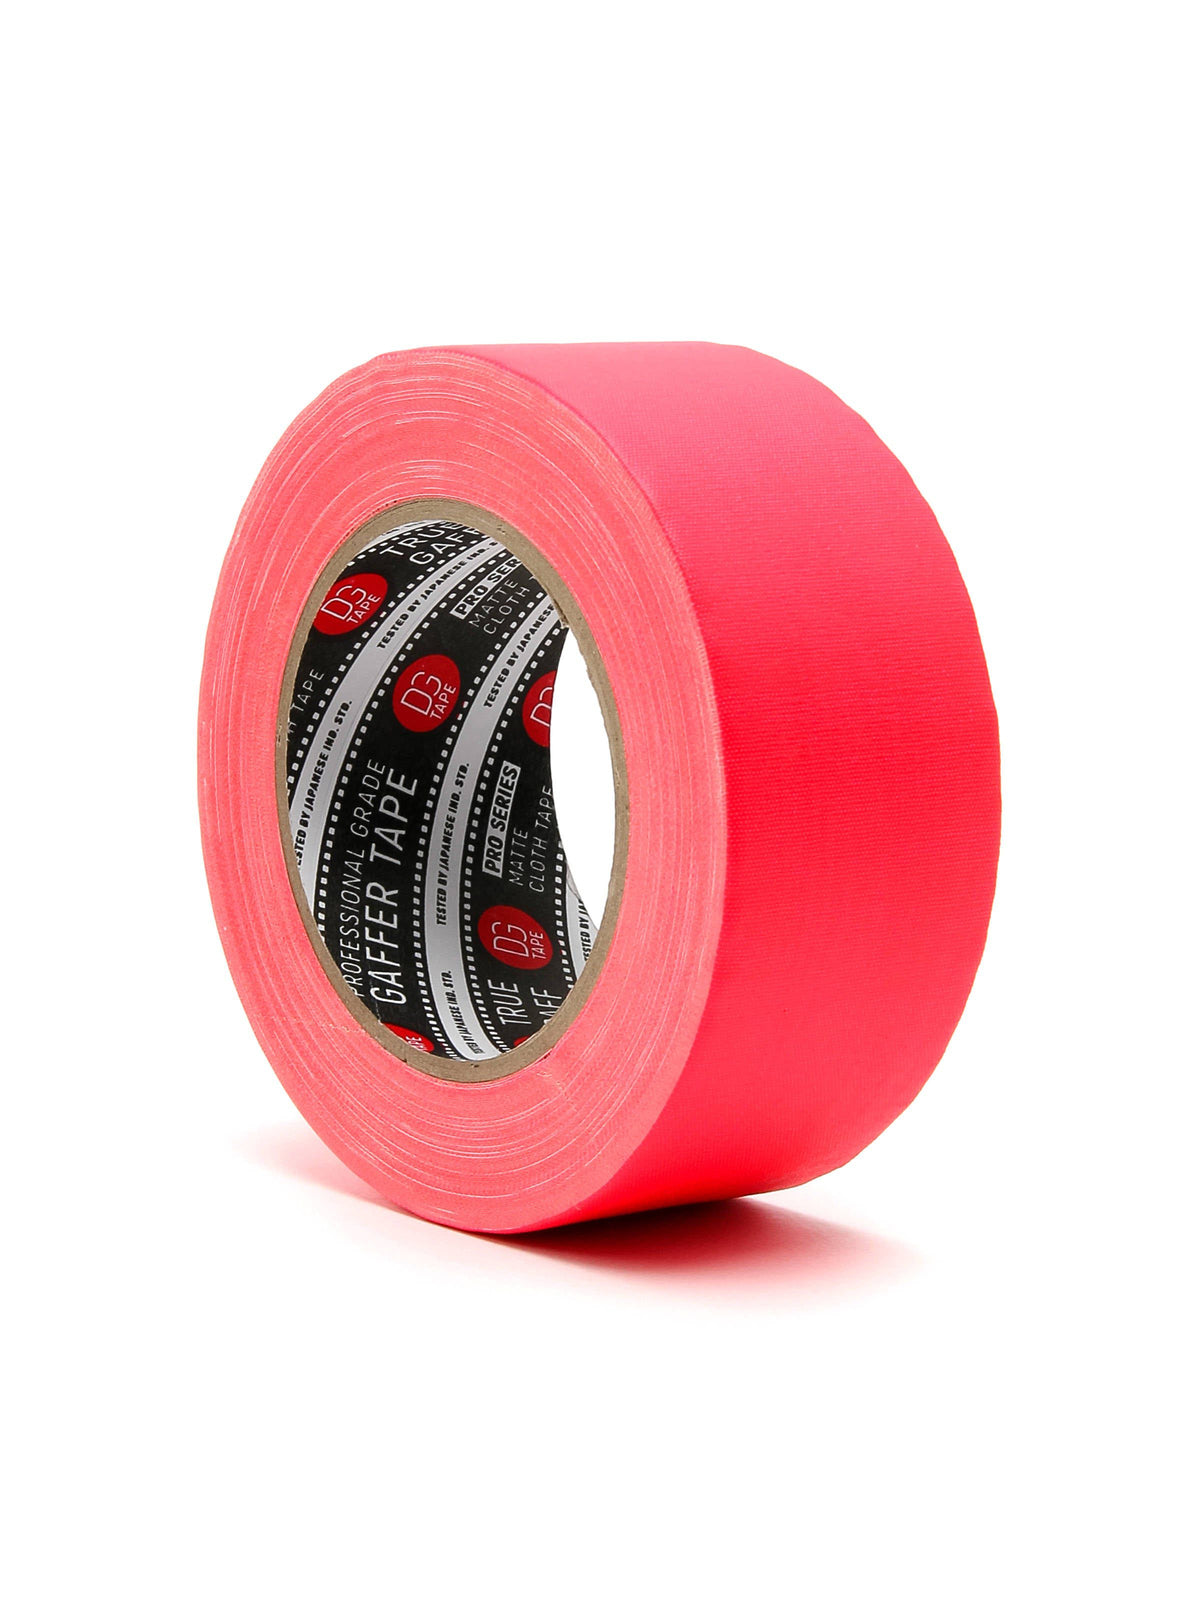 SAMPLE - 120MESH - 2inX30 PINK FLUORESCENT gaffer tape